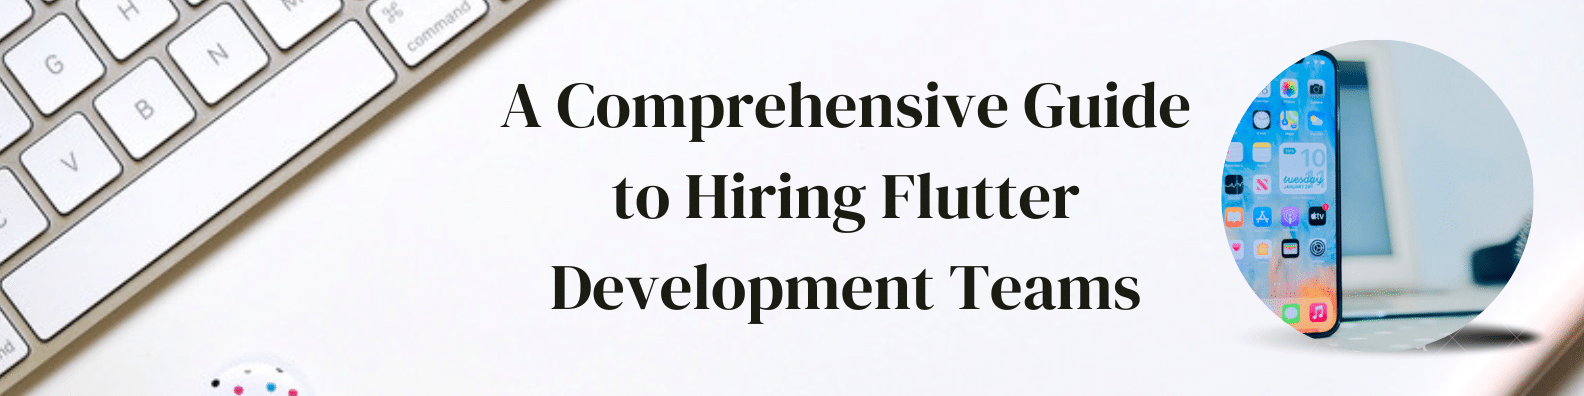 A Comprehensive Guide to Hiring Flutter Development Teams